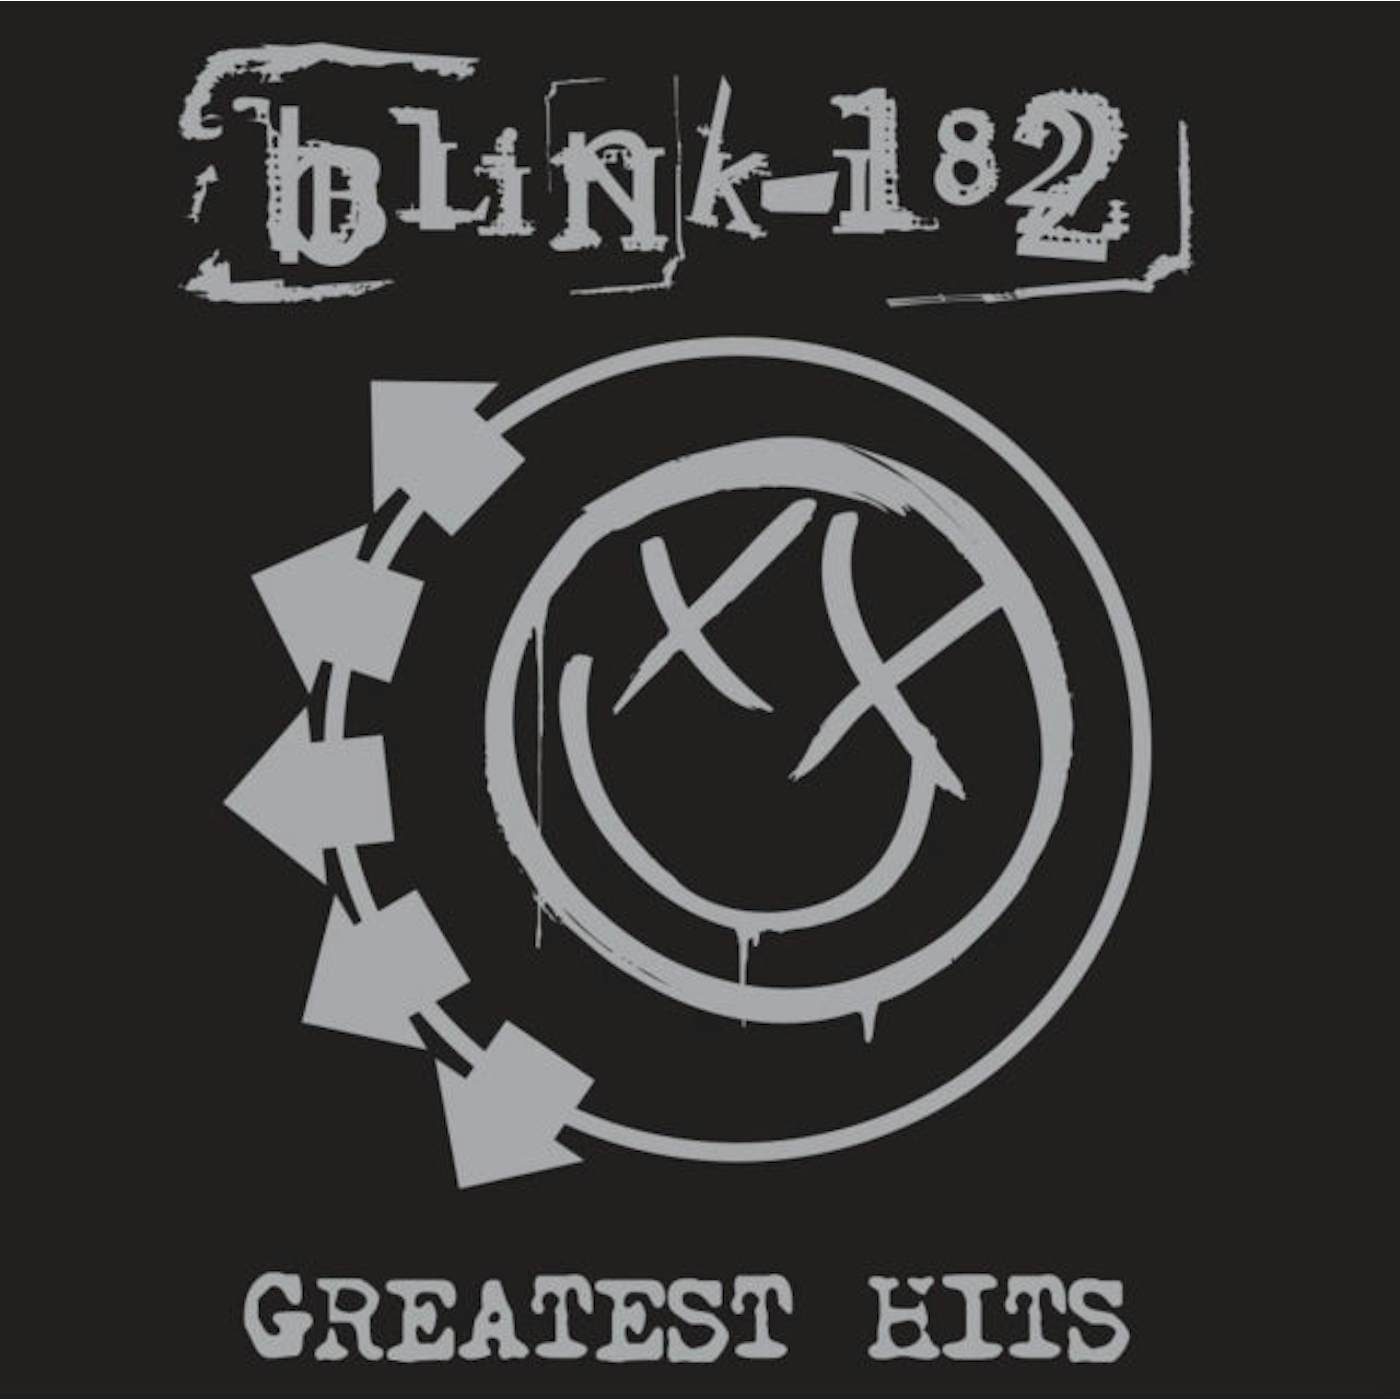 Blink-182 LP Vinyl Record - Greatest Hits